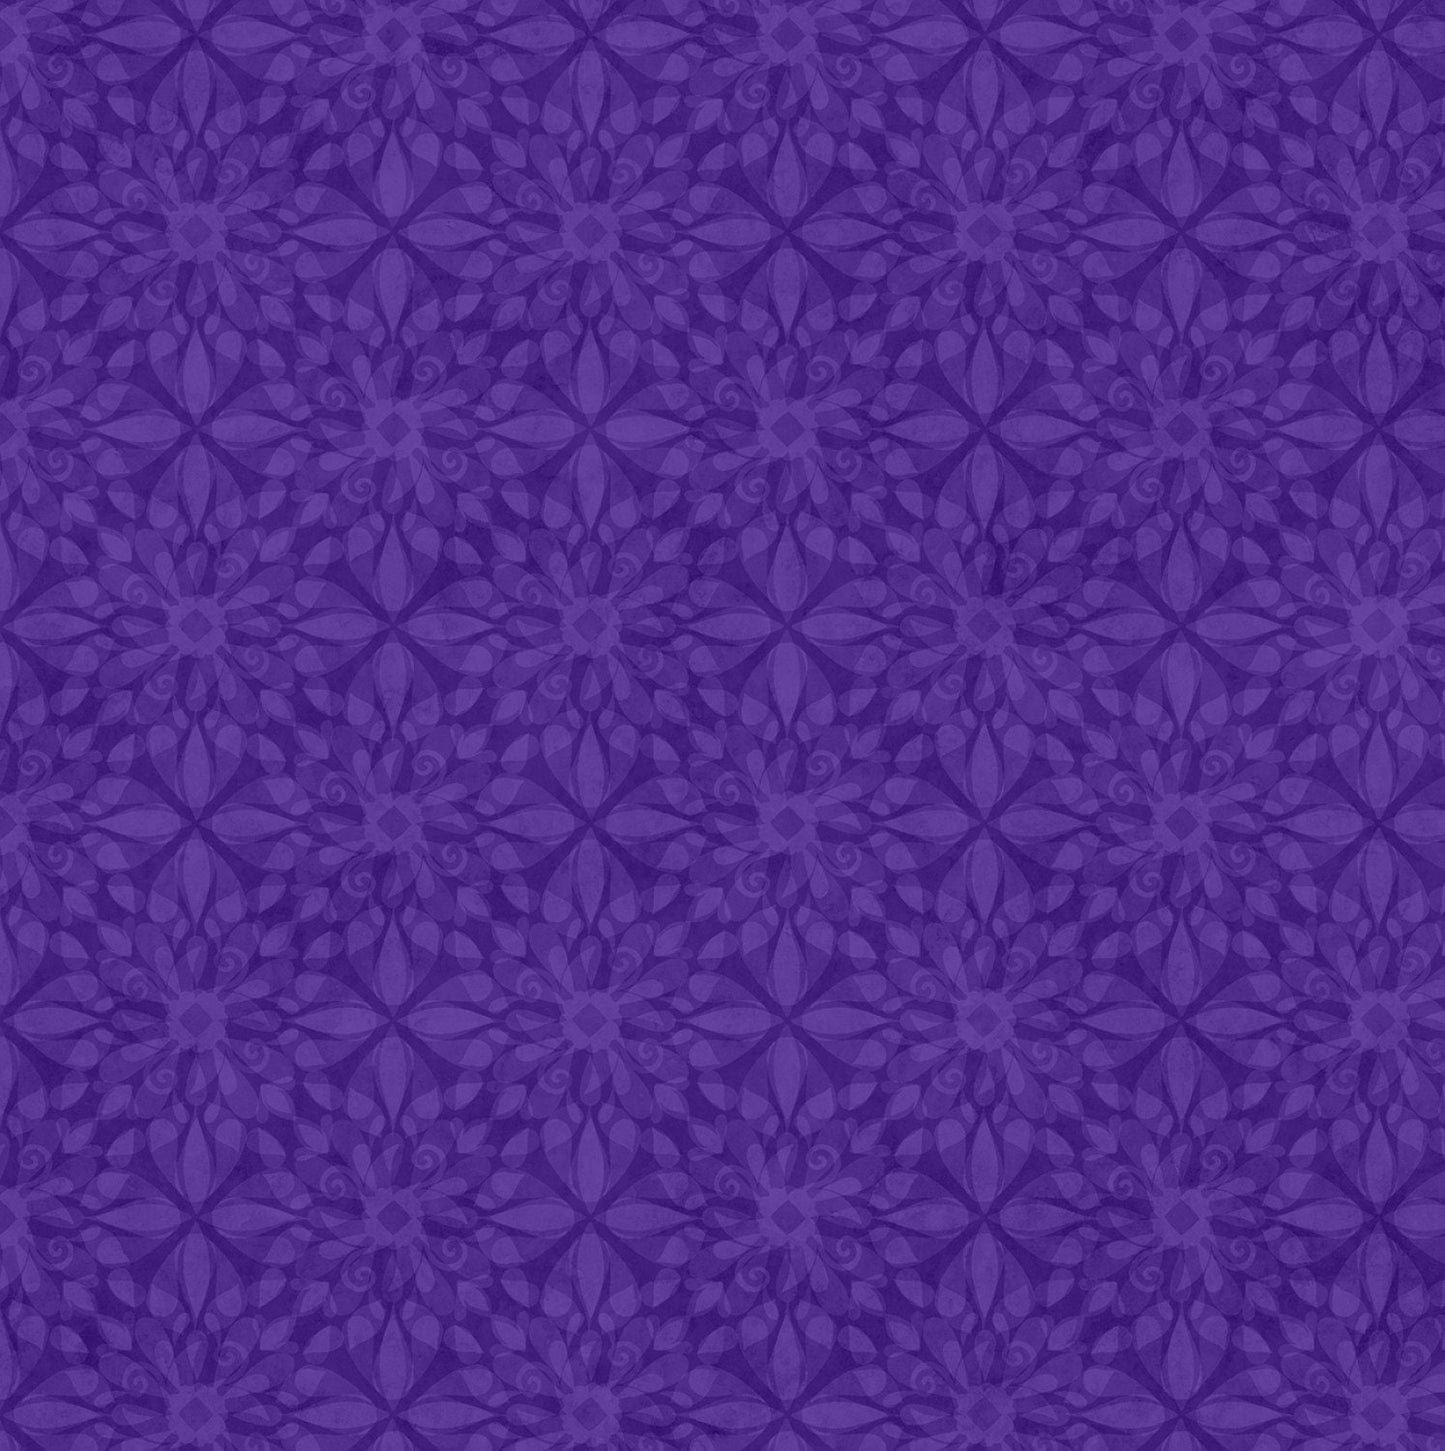 Safari, So Goodie by Hello Angel Purple Teardrop Texture 77636-644 Cotton Woven Fabric